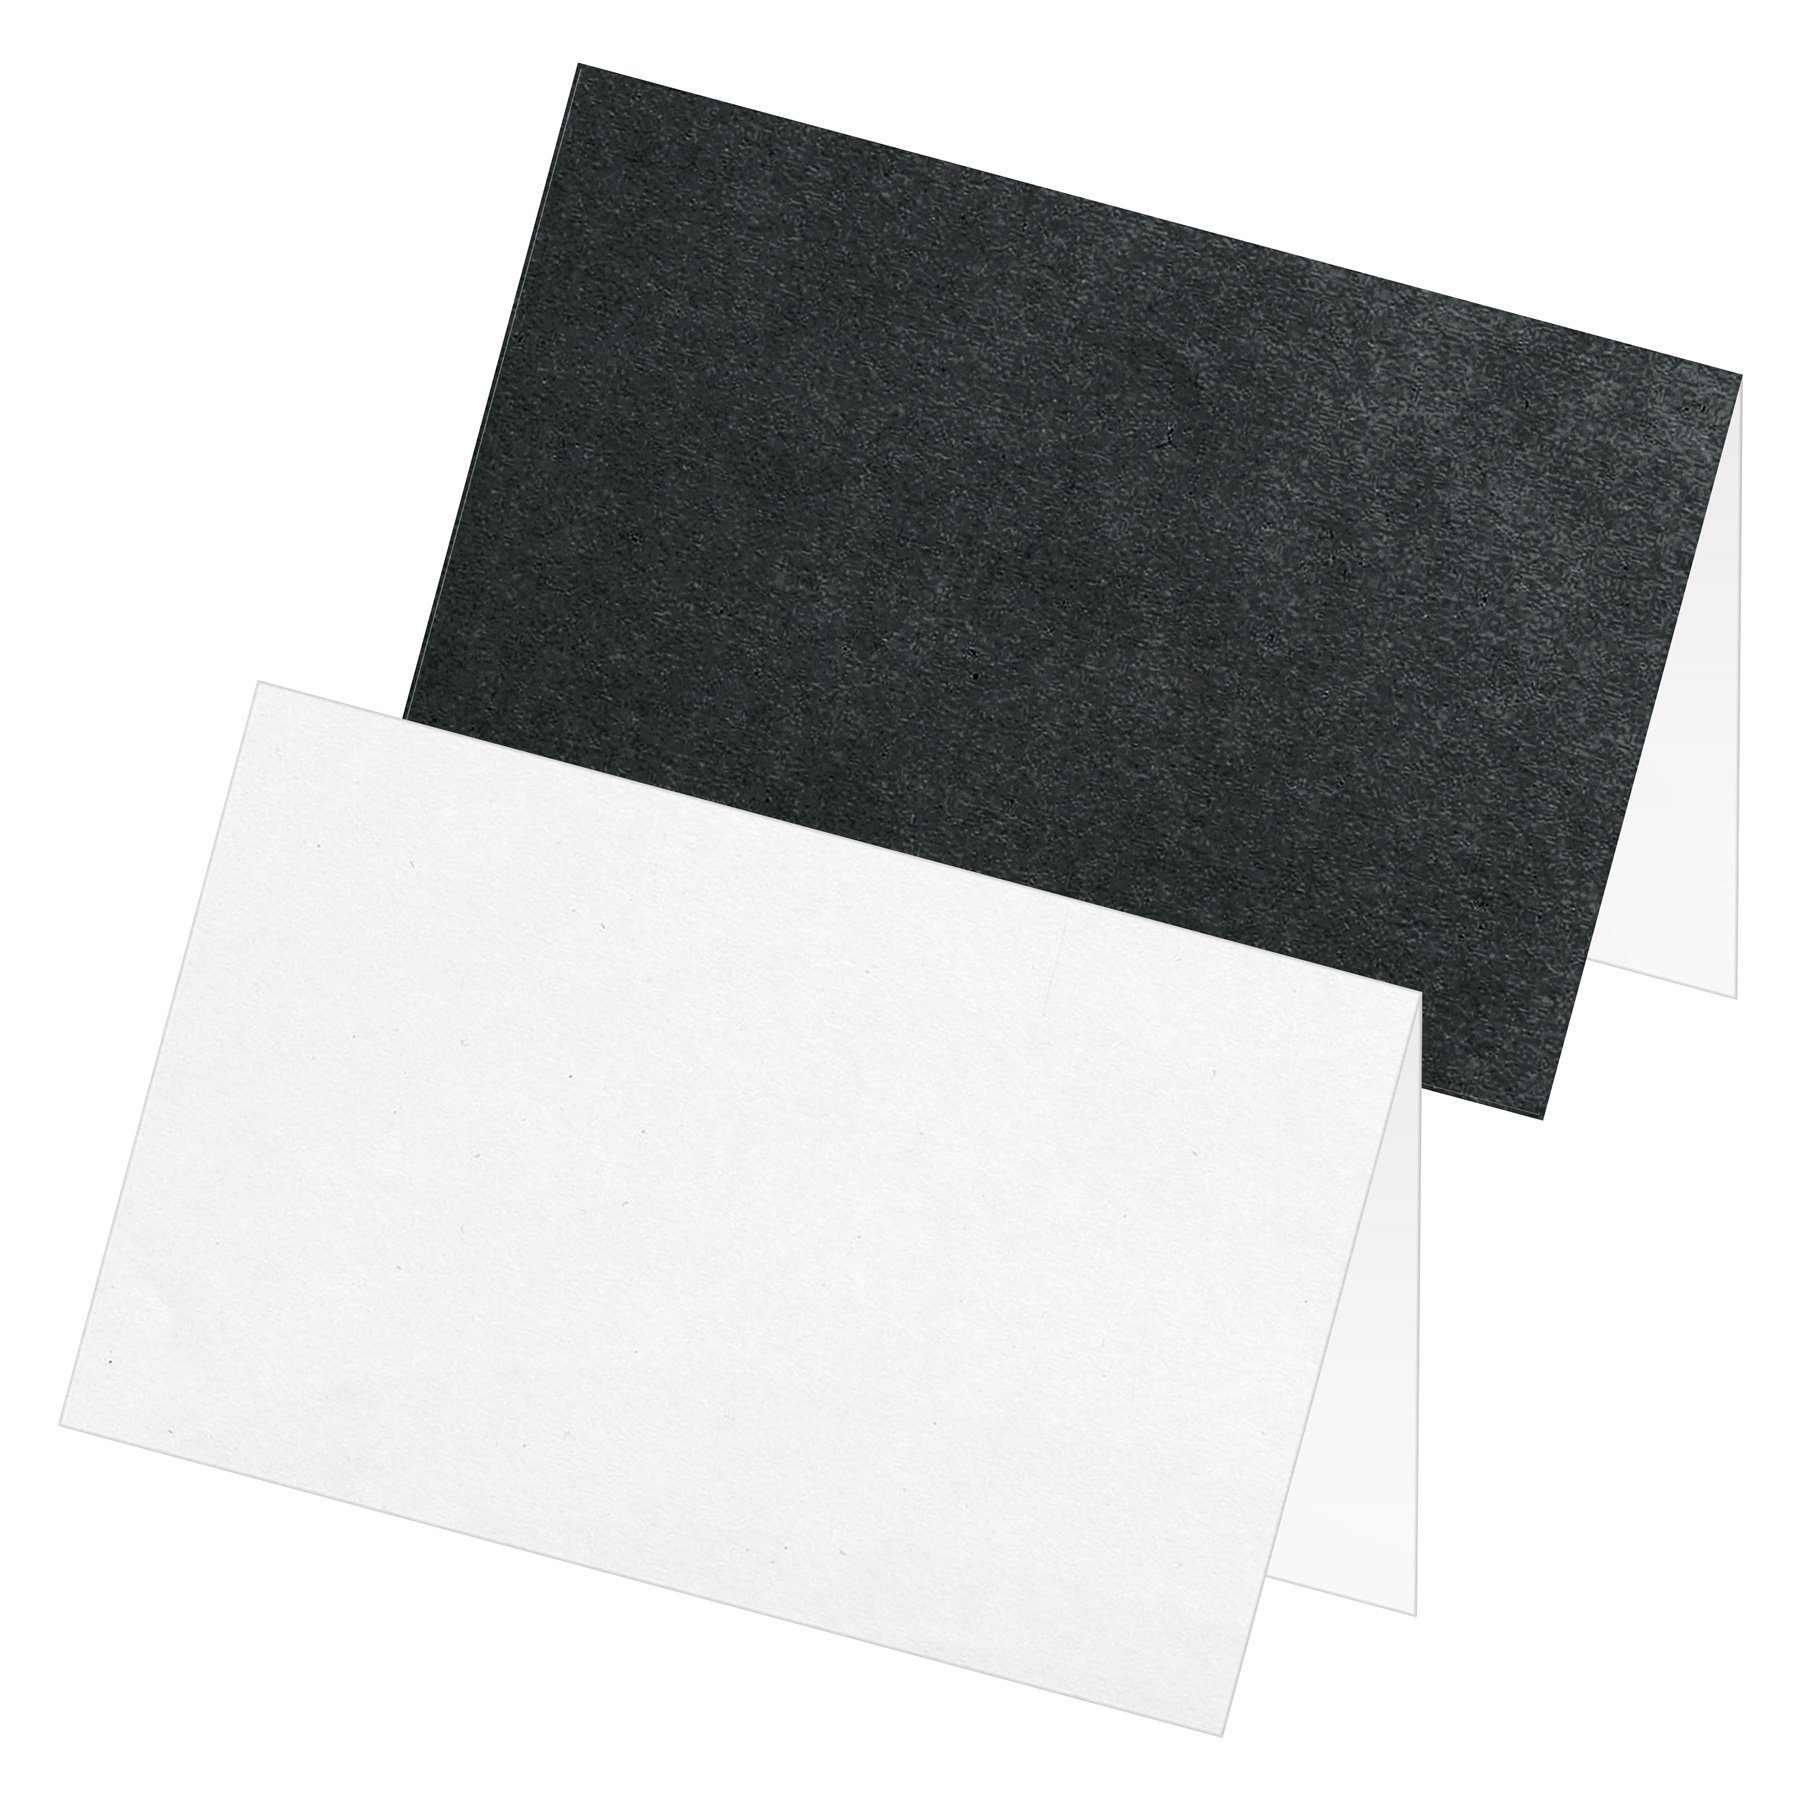 itenga Grußkarten itenga 24x Tischkarte Platzkarte Namensschild weiß grau mit Papierstru